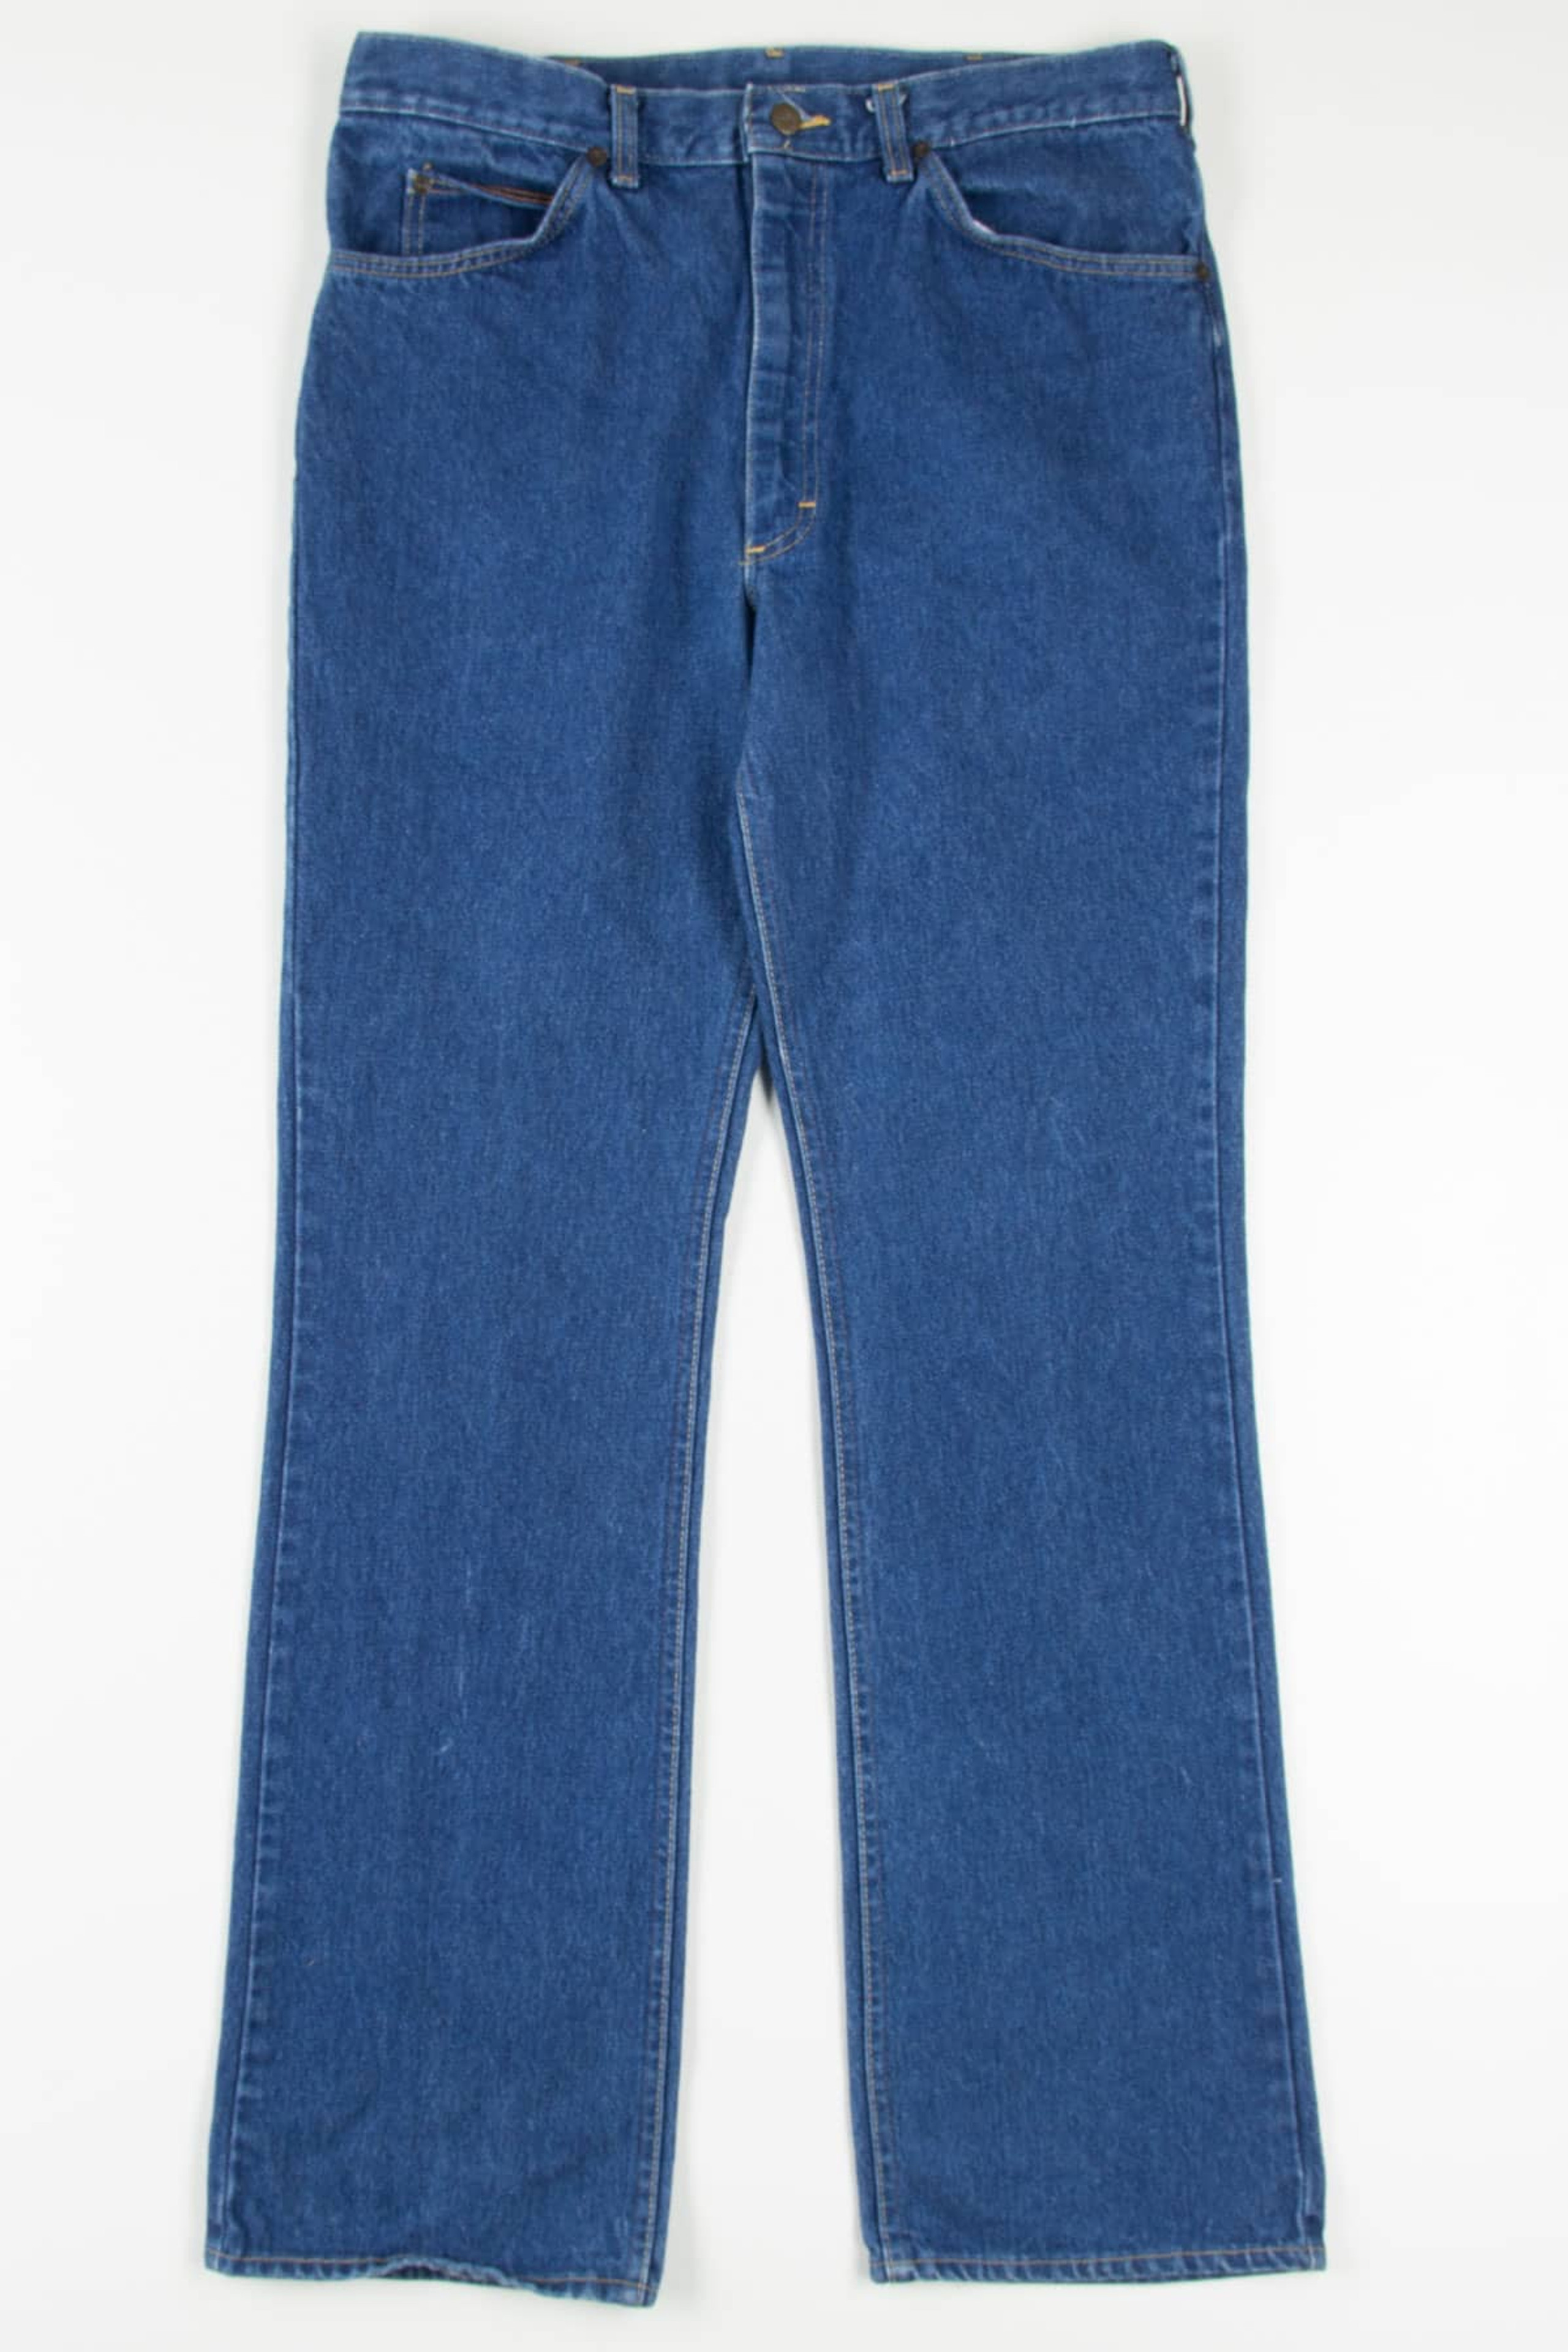 Pleated Front Vintage Lee Jeans (sz. 9) - Ragstock.com